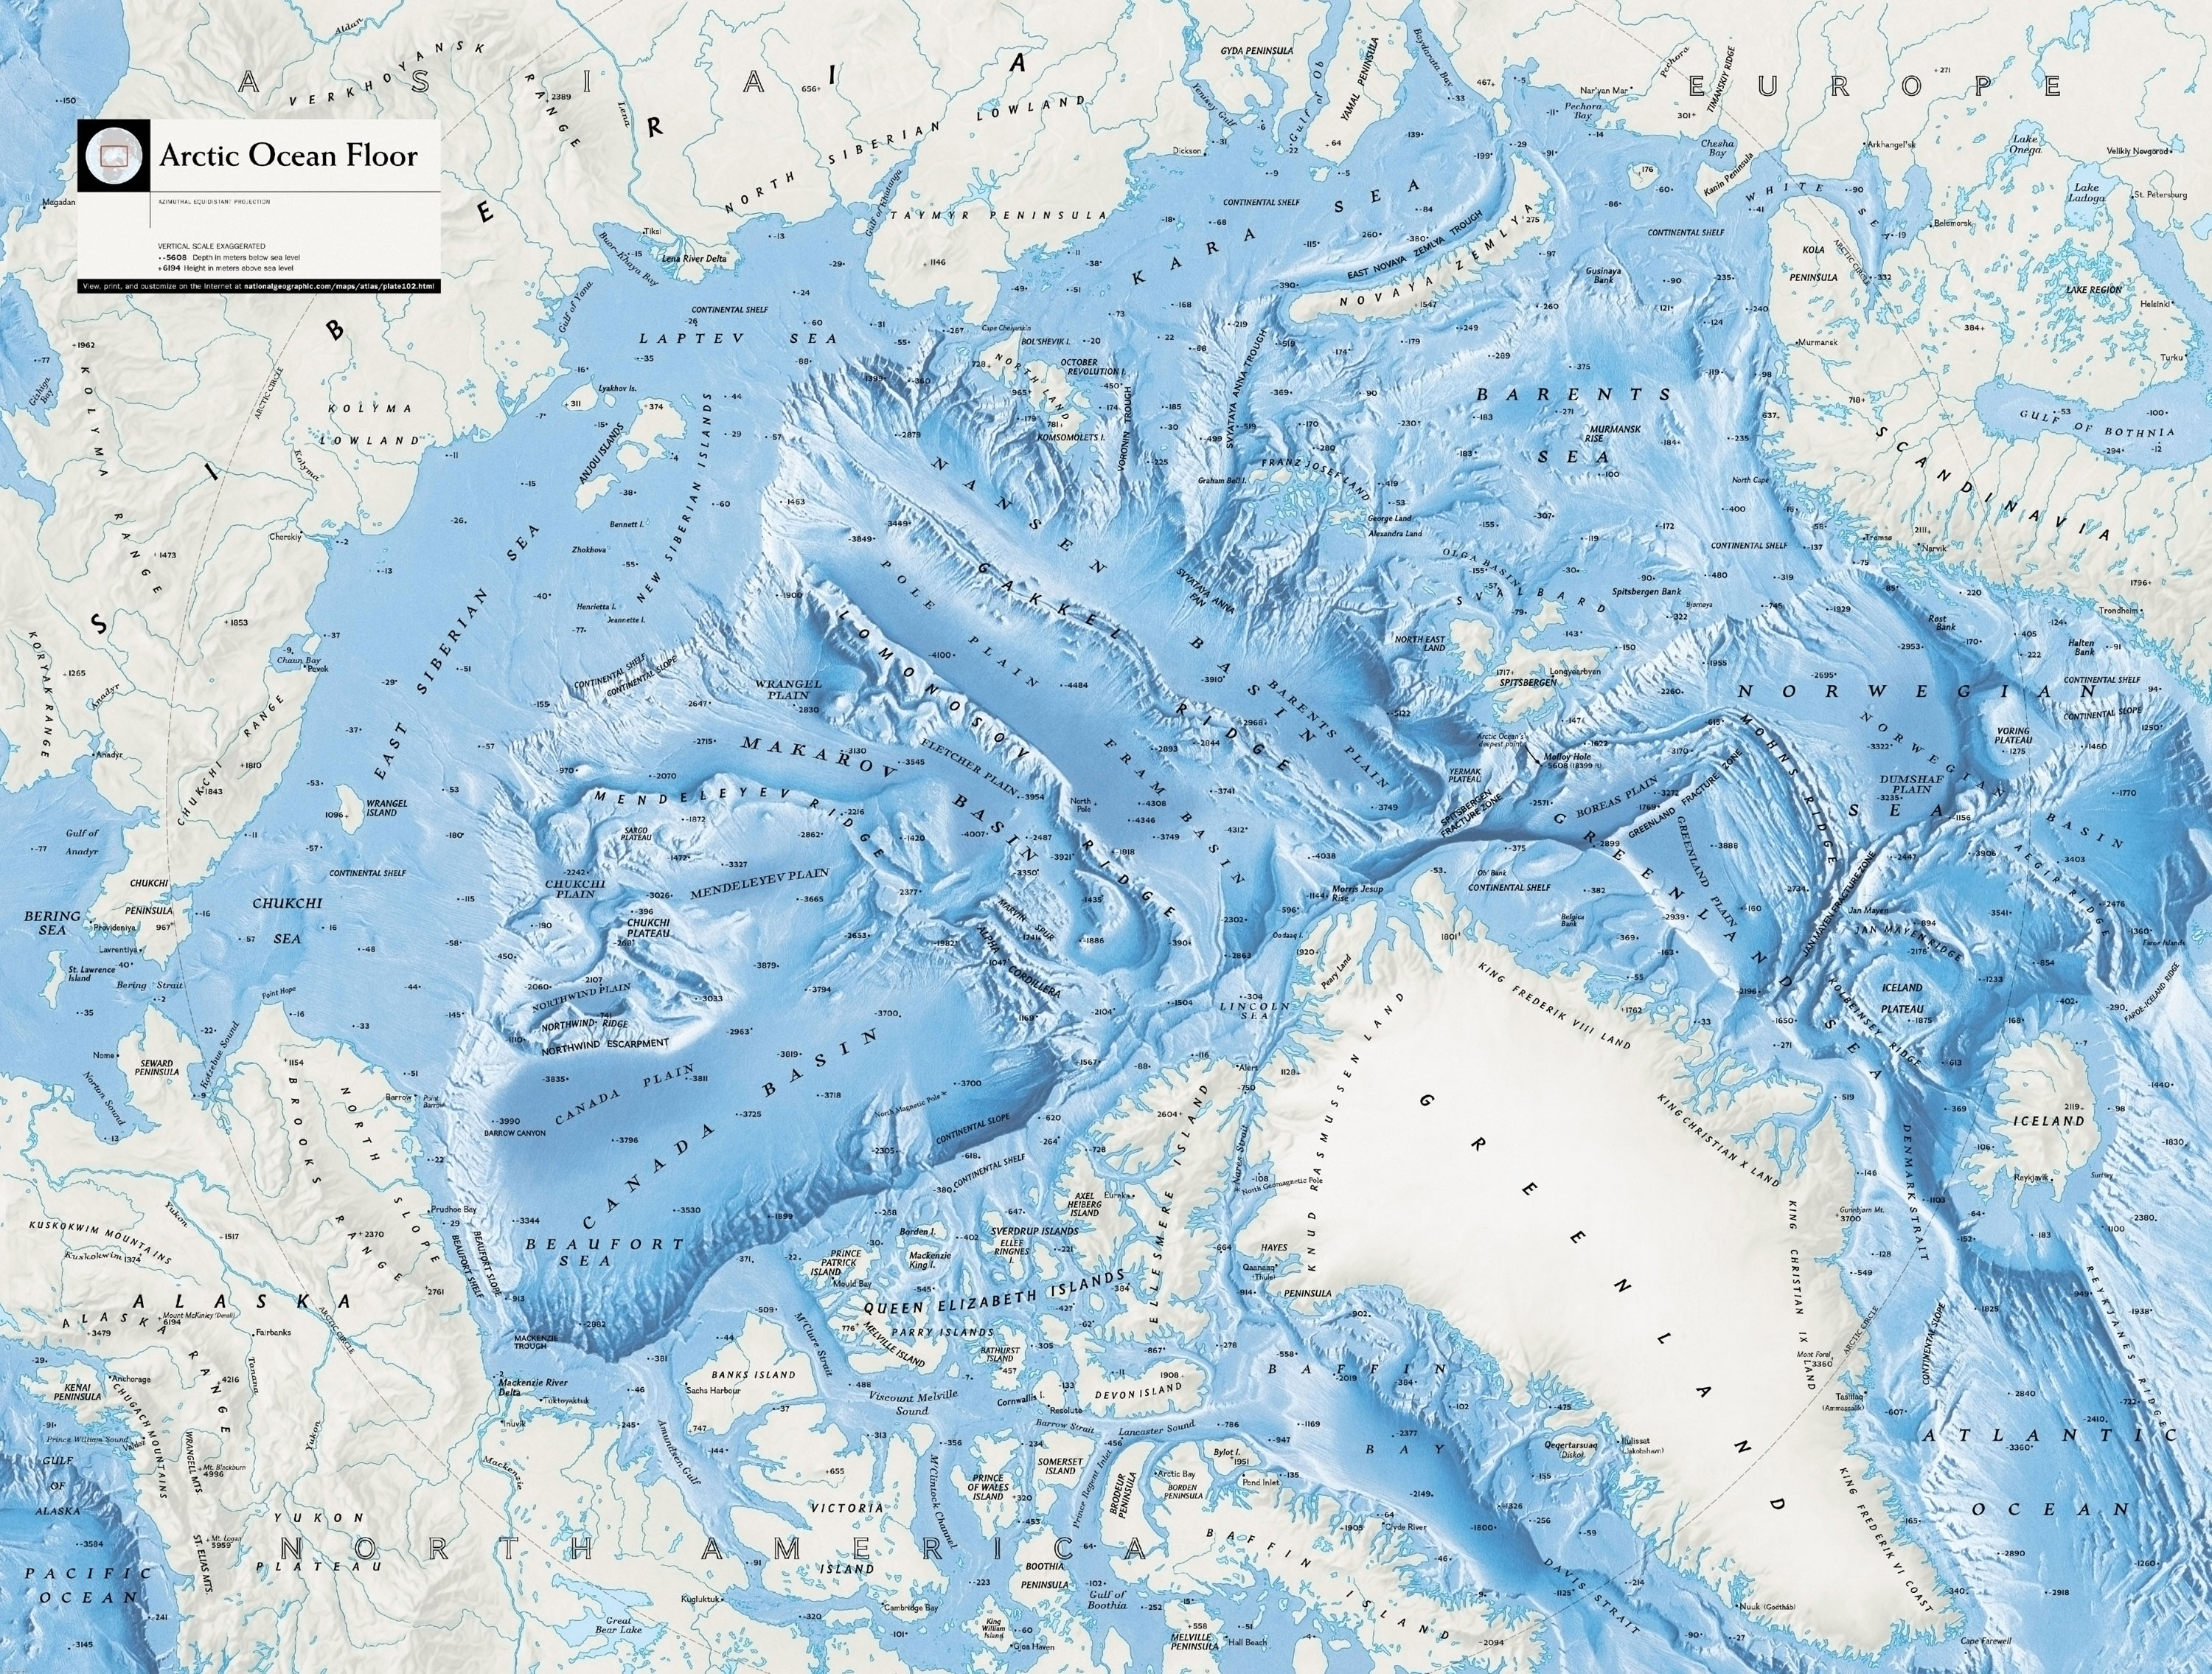 Бассейн антарктического океана. Рельеф дна Северного Ледовитого океана. Северный Ледовитый океан рельеф дна океана. Арктика Северный Ледовитый океан. Карта дна Северного Ледовитого океана.